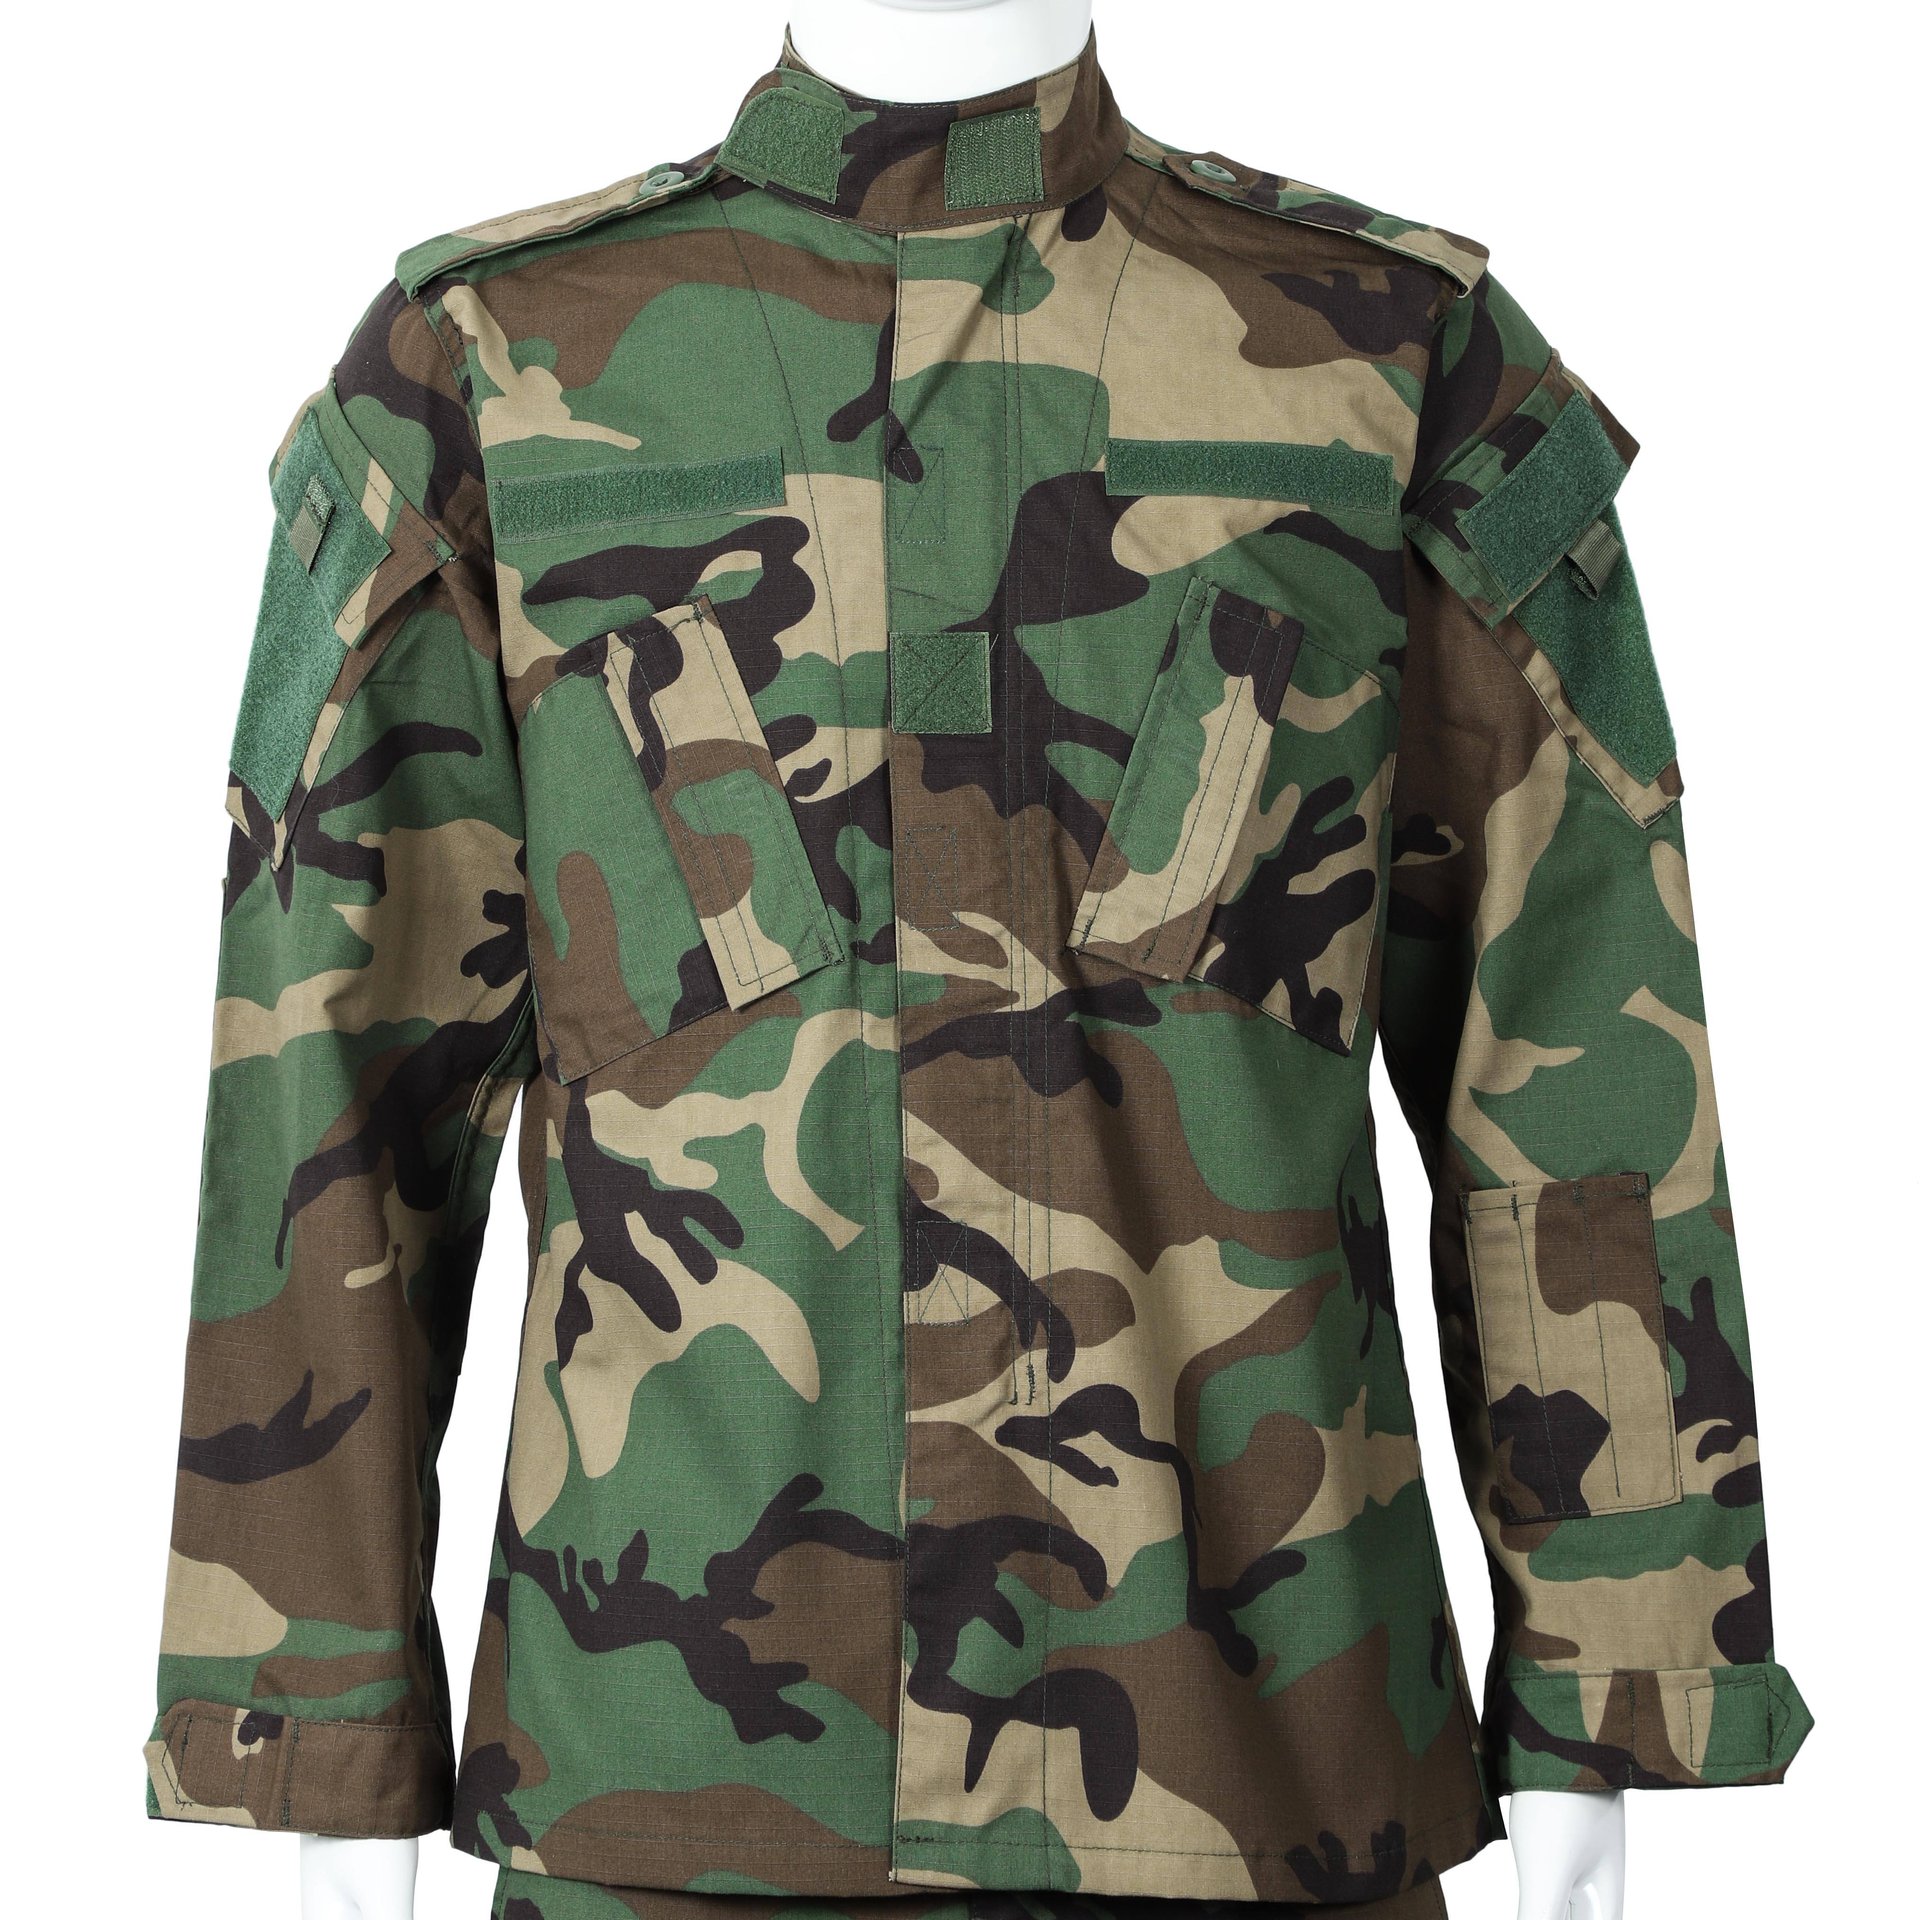 Woodland Camo American Uniform 65/35 TC Combat Camouflage Suit Tactical Uniform